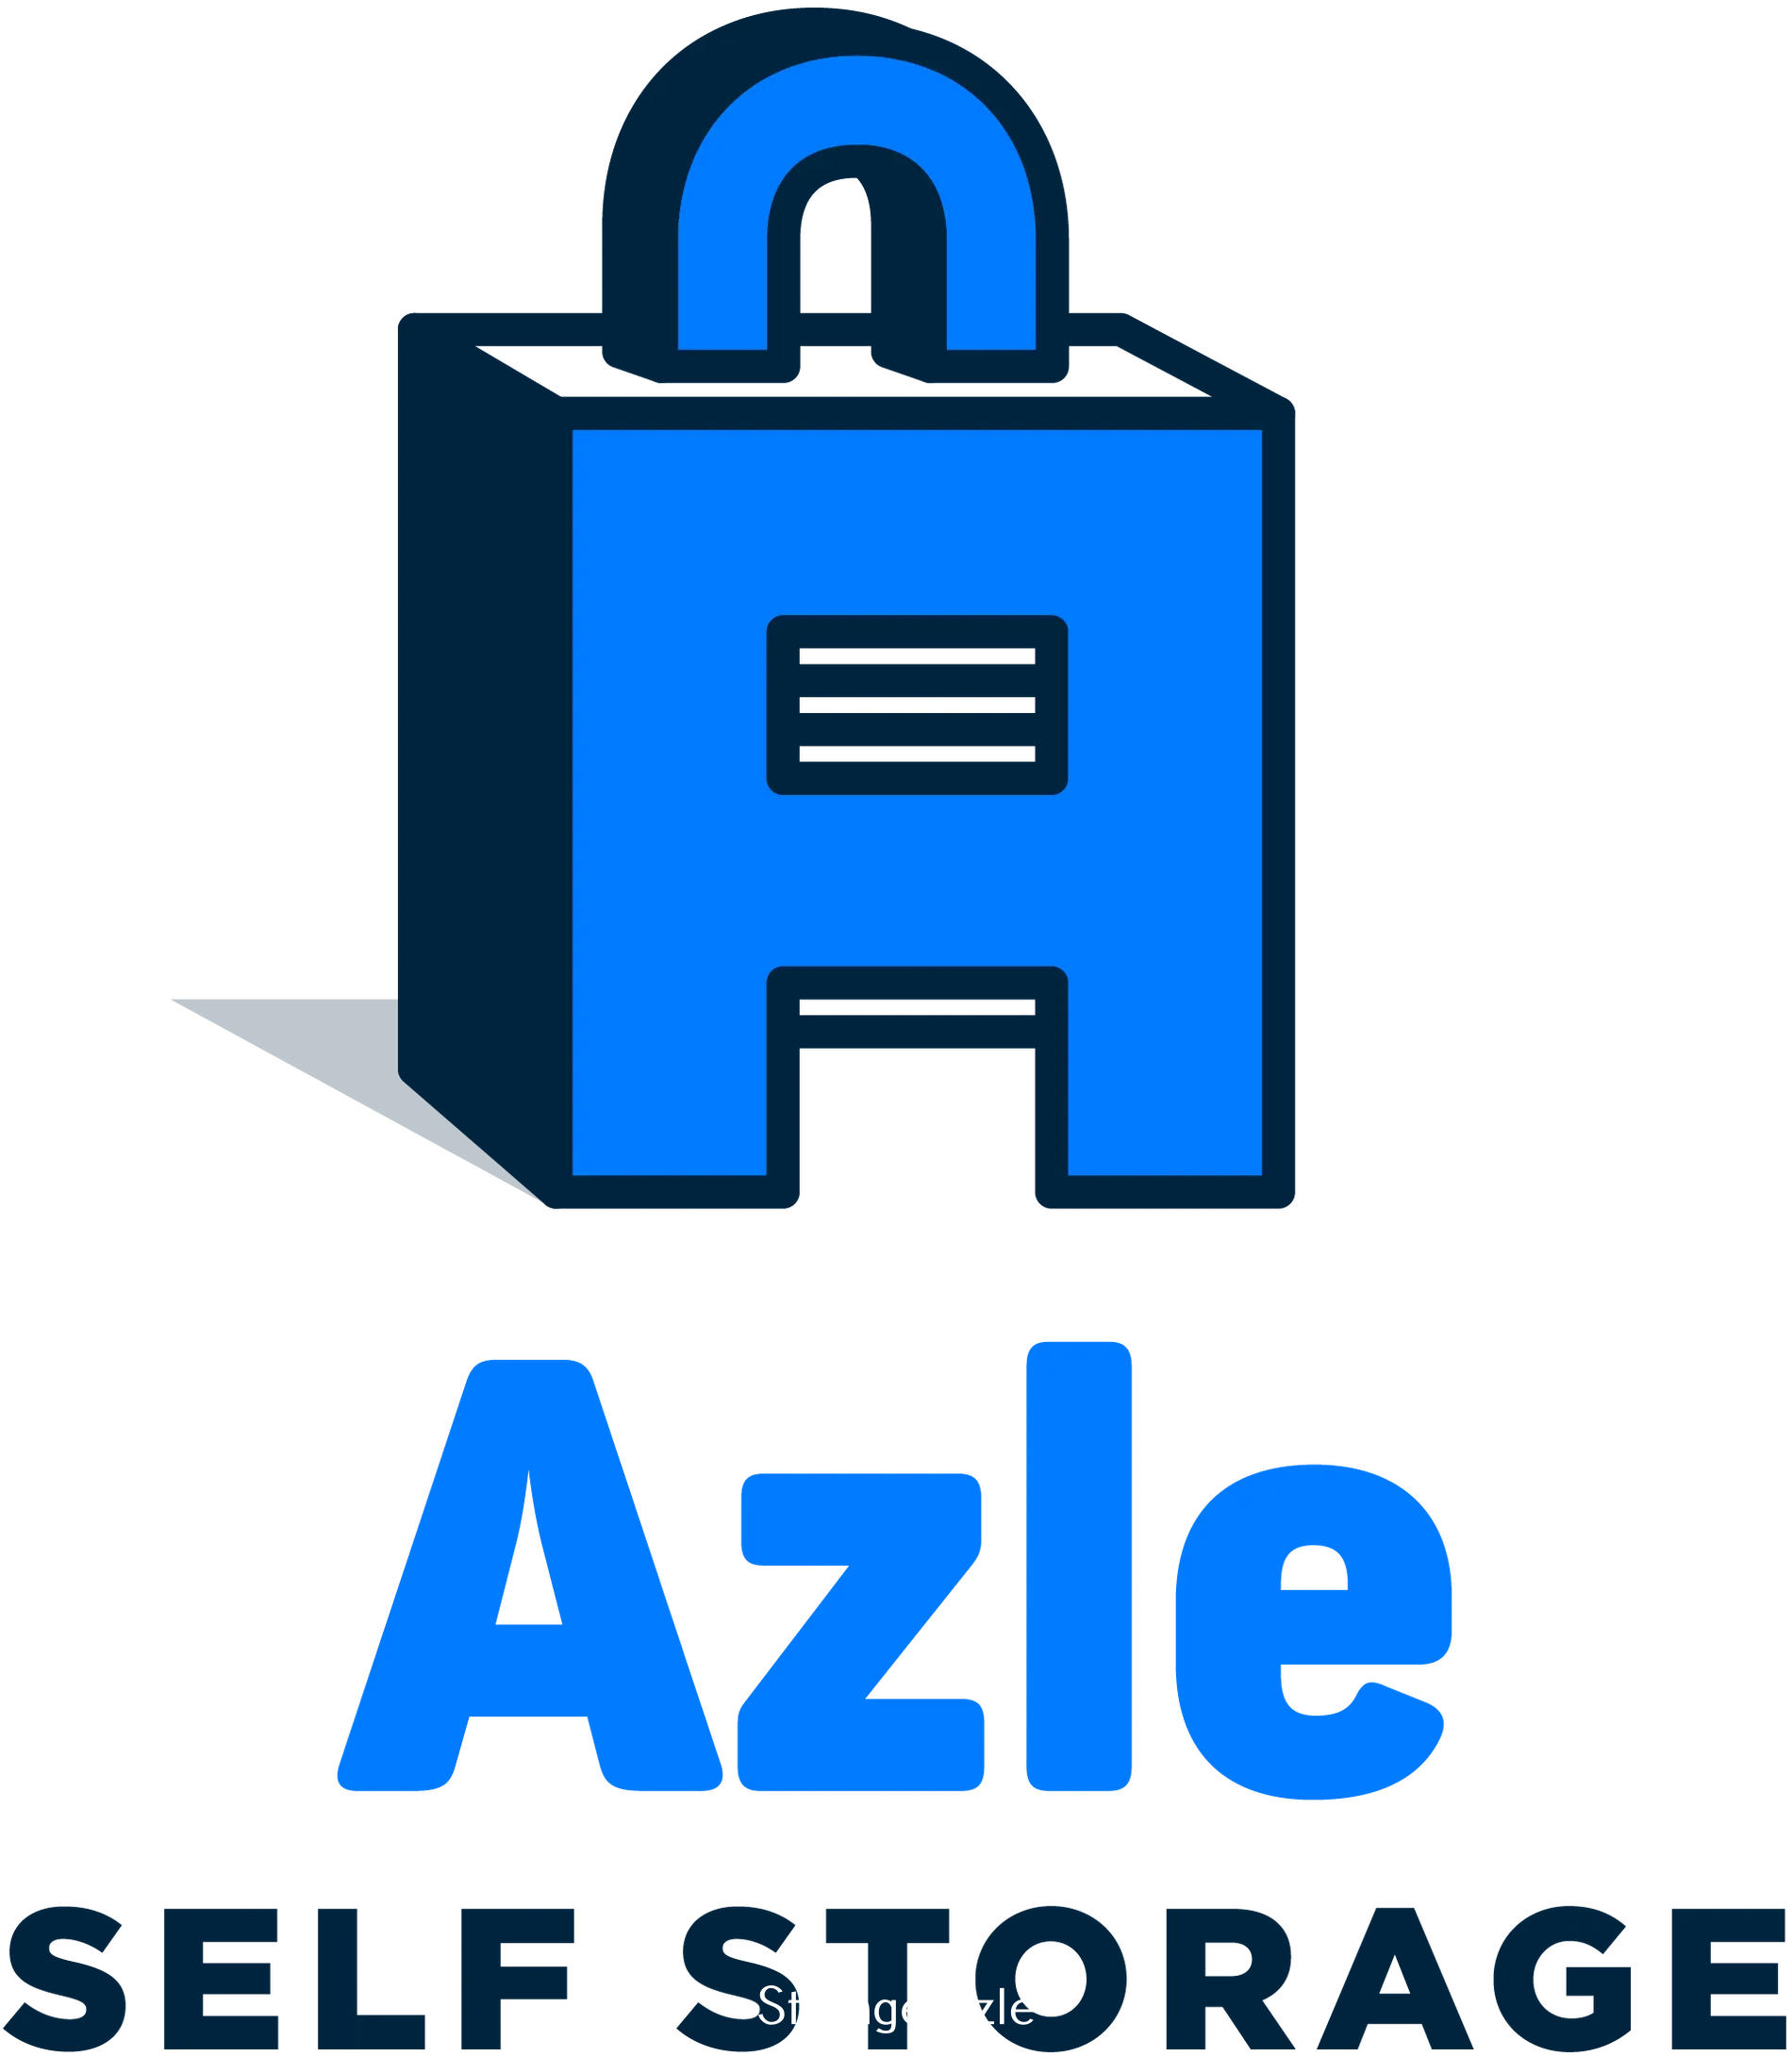 Azle-Self-Storage-marked-logo-1.jpg